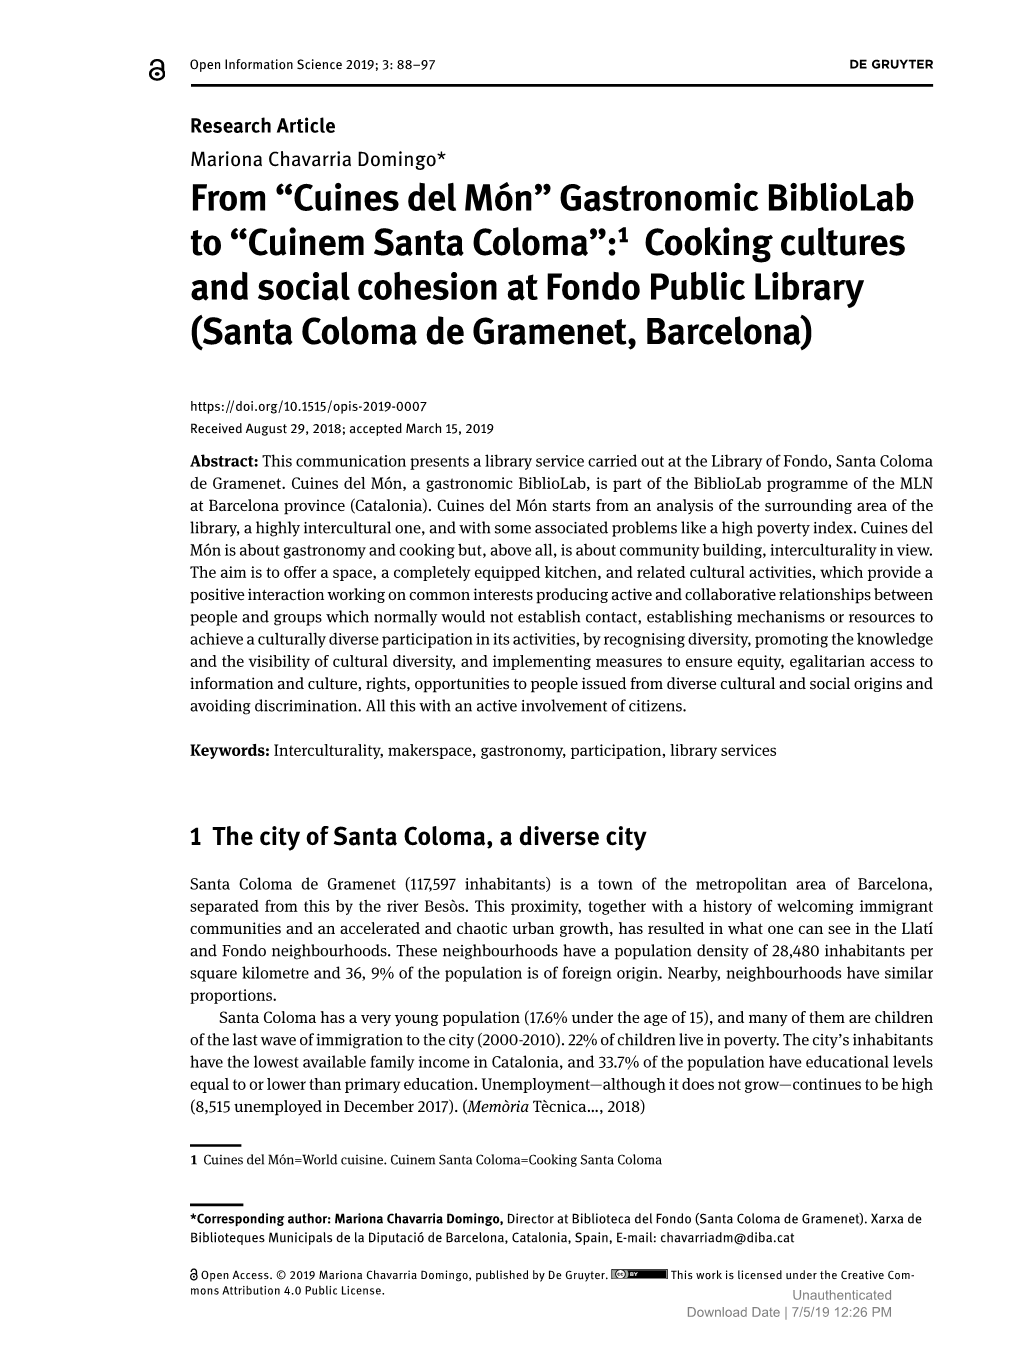 “Cuines Del Món” Gastronomic Bibliolab to “Cuinem Santa Coloma”:1 Cooking Cultures and Social Cohesion at Fondo Public Library (Santa Coloma De Gramenet, Barcelona)